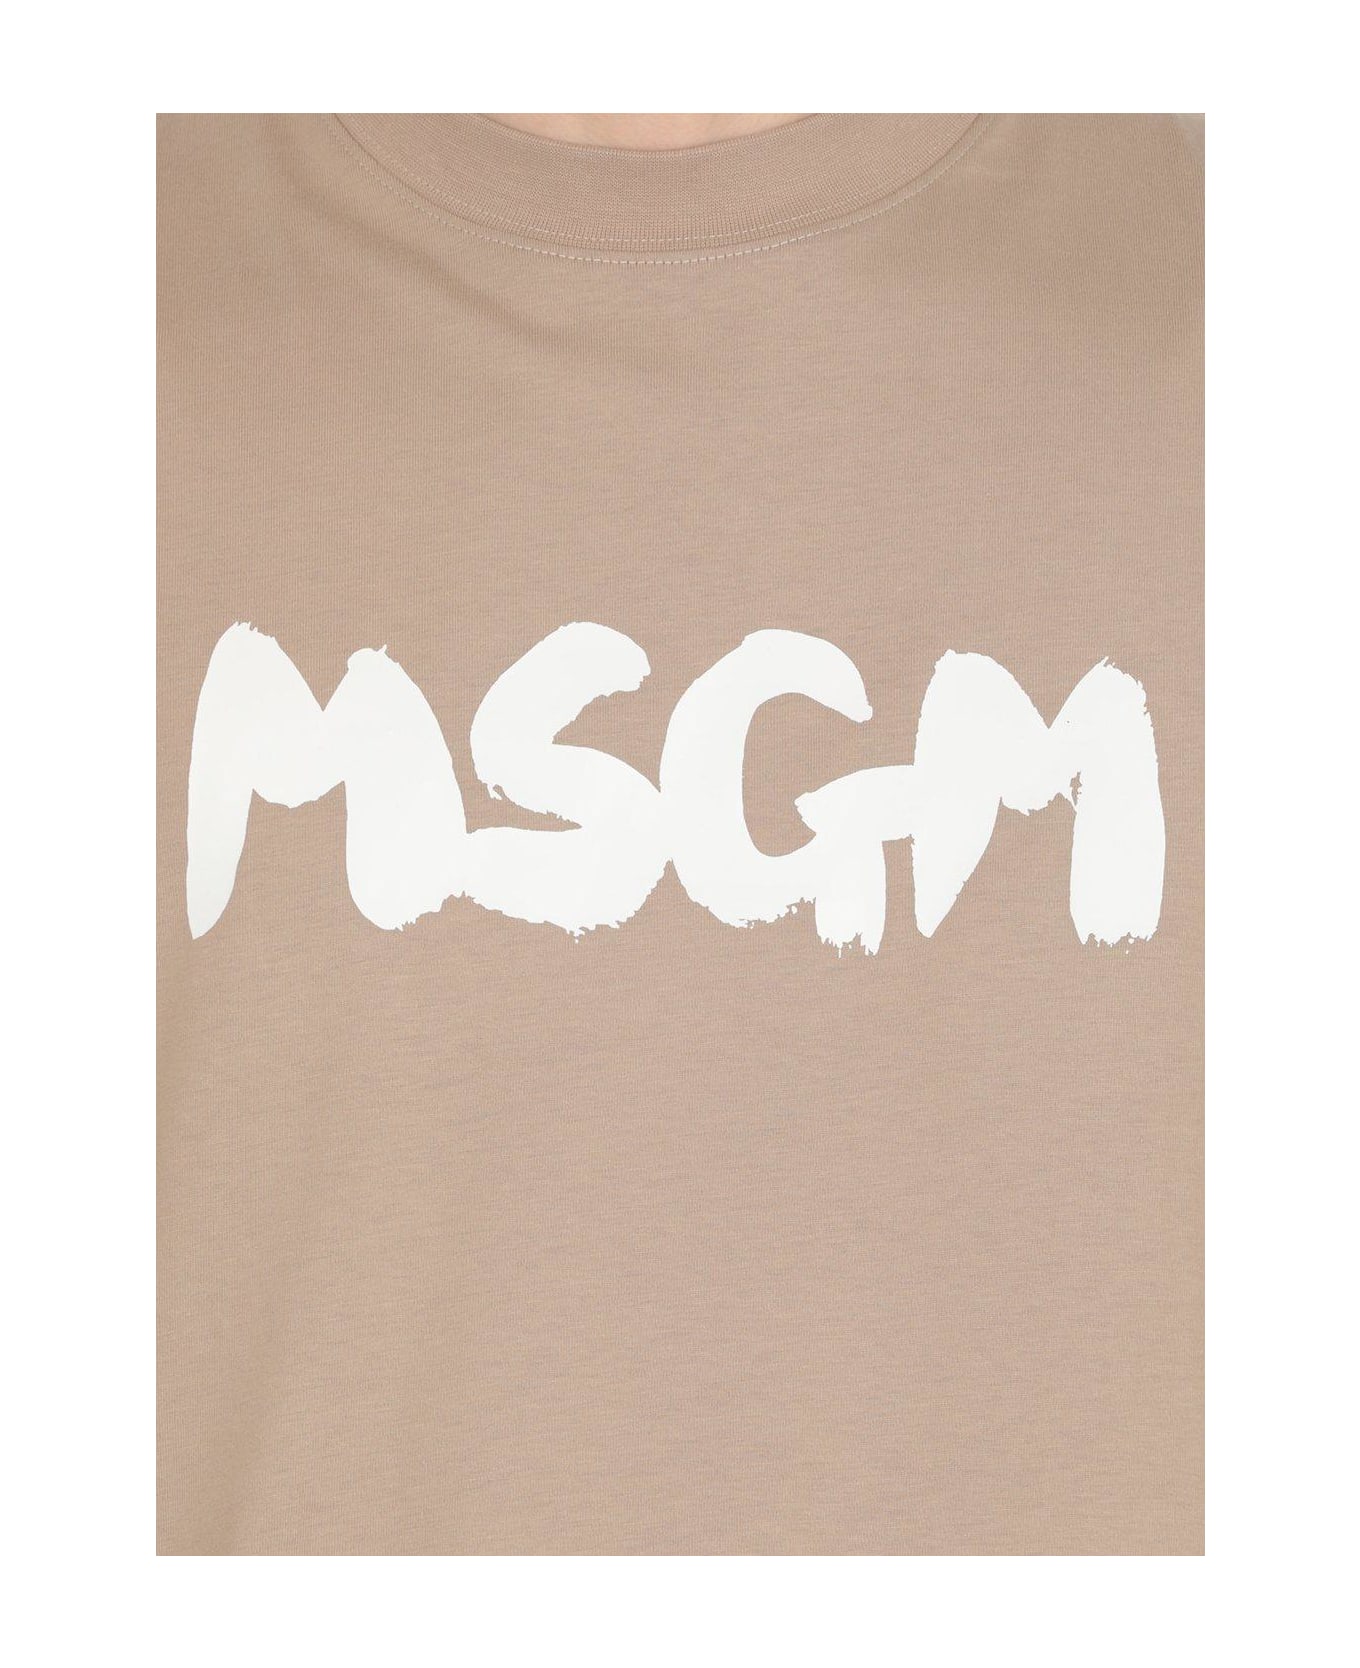 MSGM Logo Printed Crewneck T-shirt - Beige シャツ